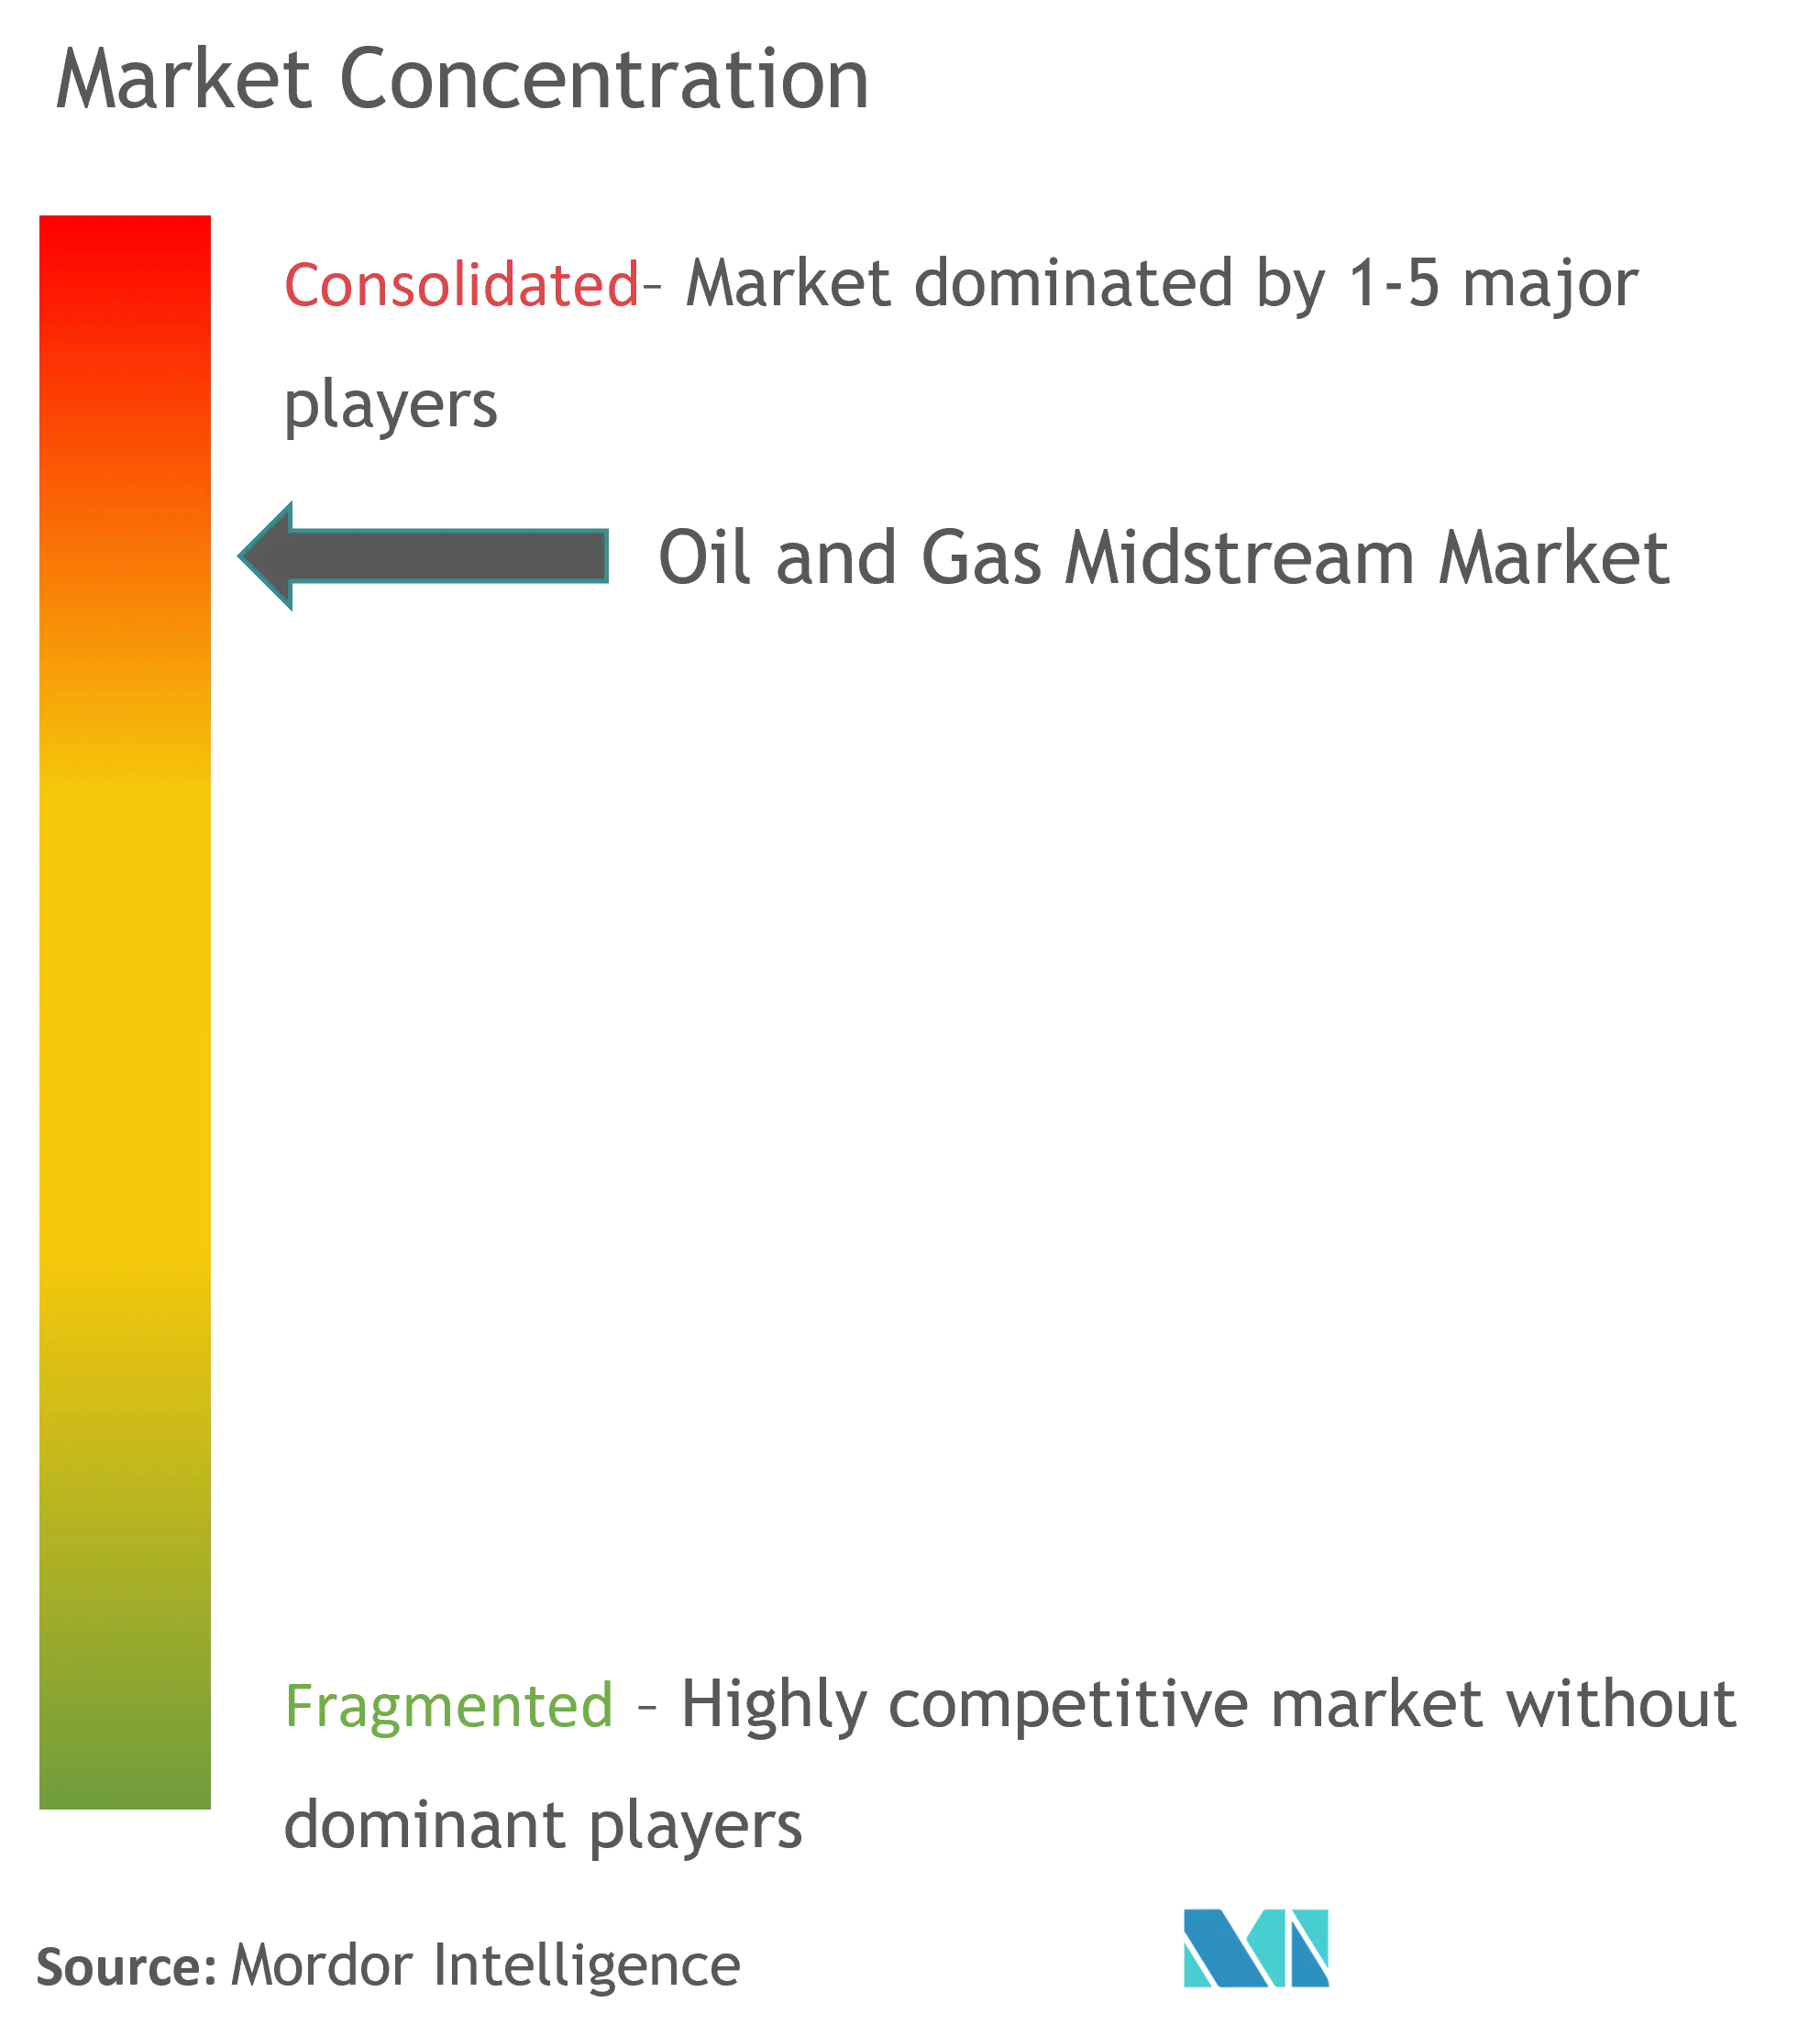 Market Concentration - Global Oil & Gas Midstream Market.png